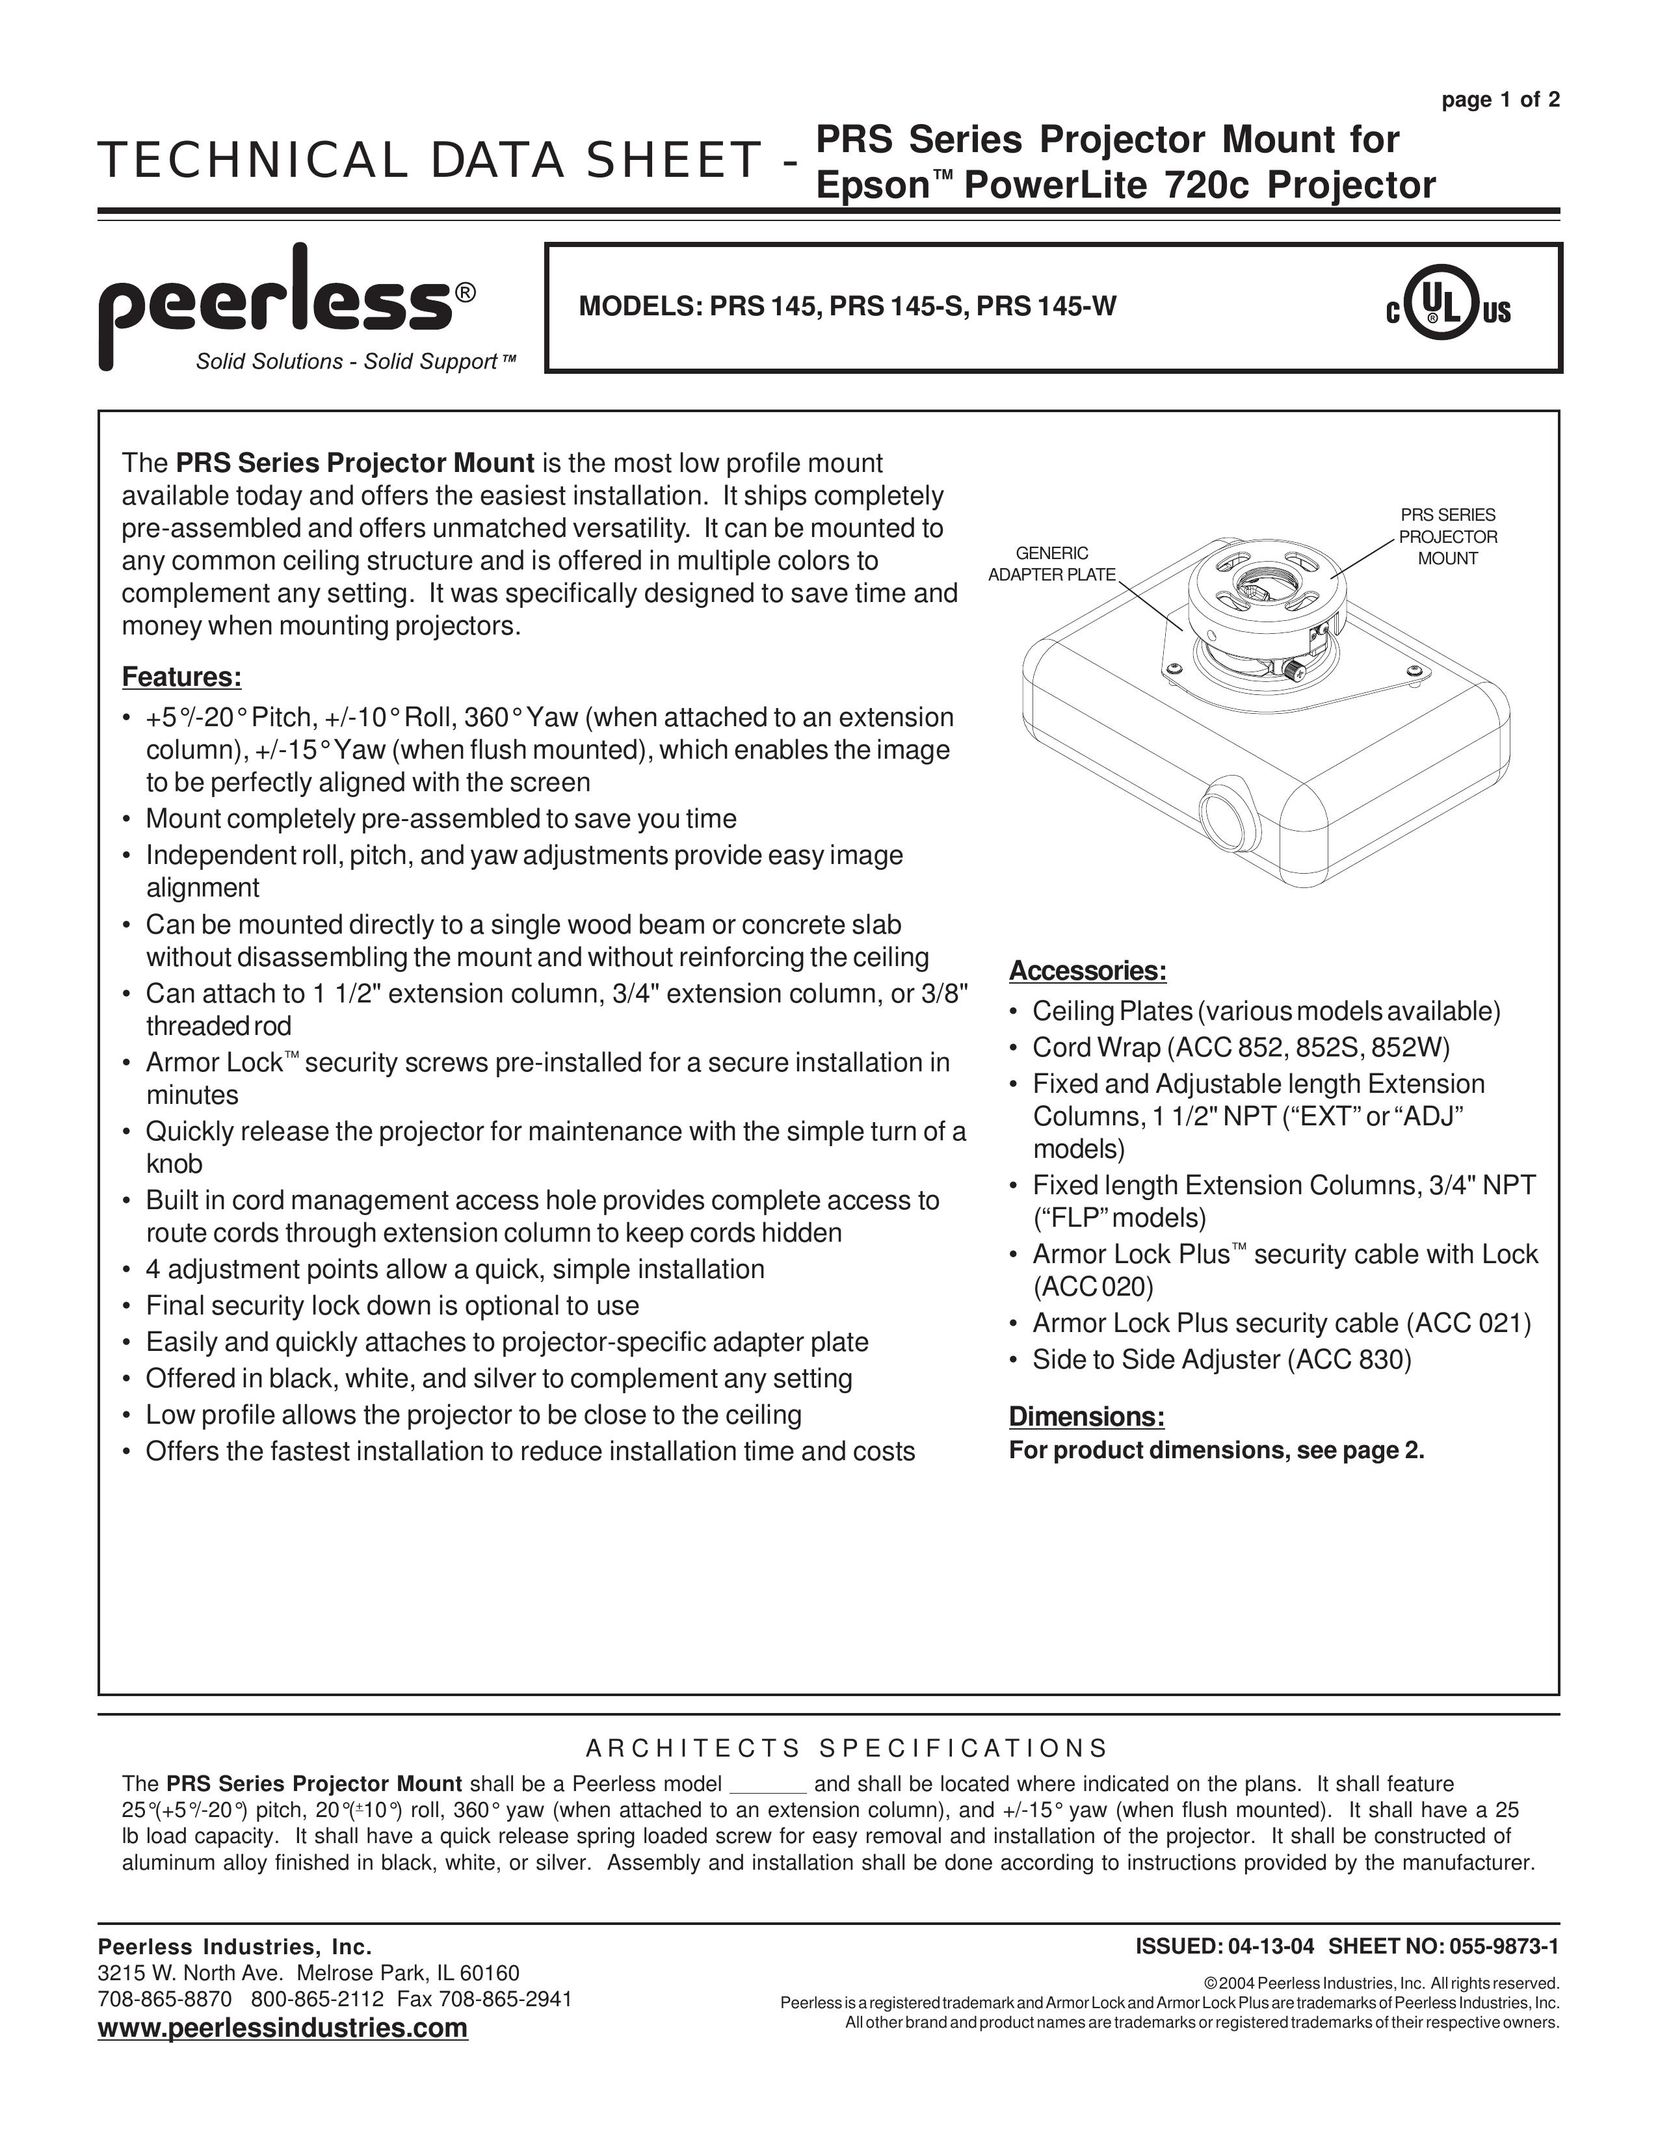 Peerless Industries PRS 145 Projector Accessories User Manual